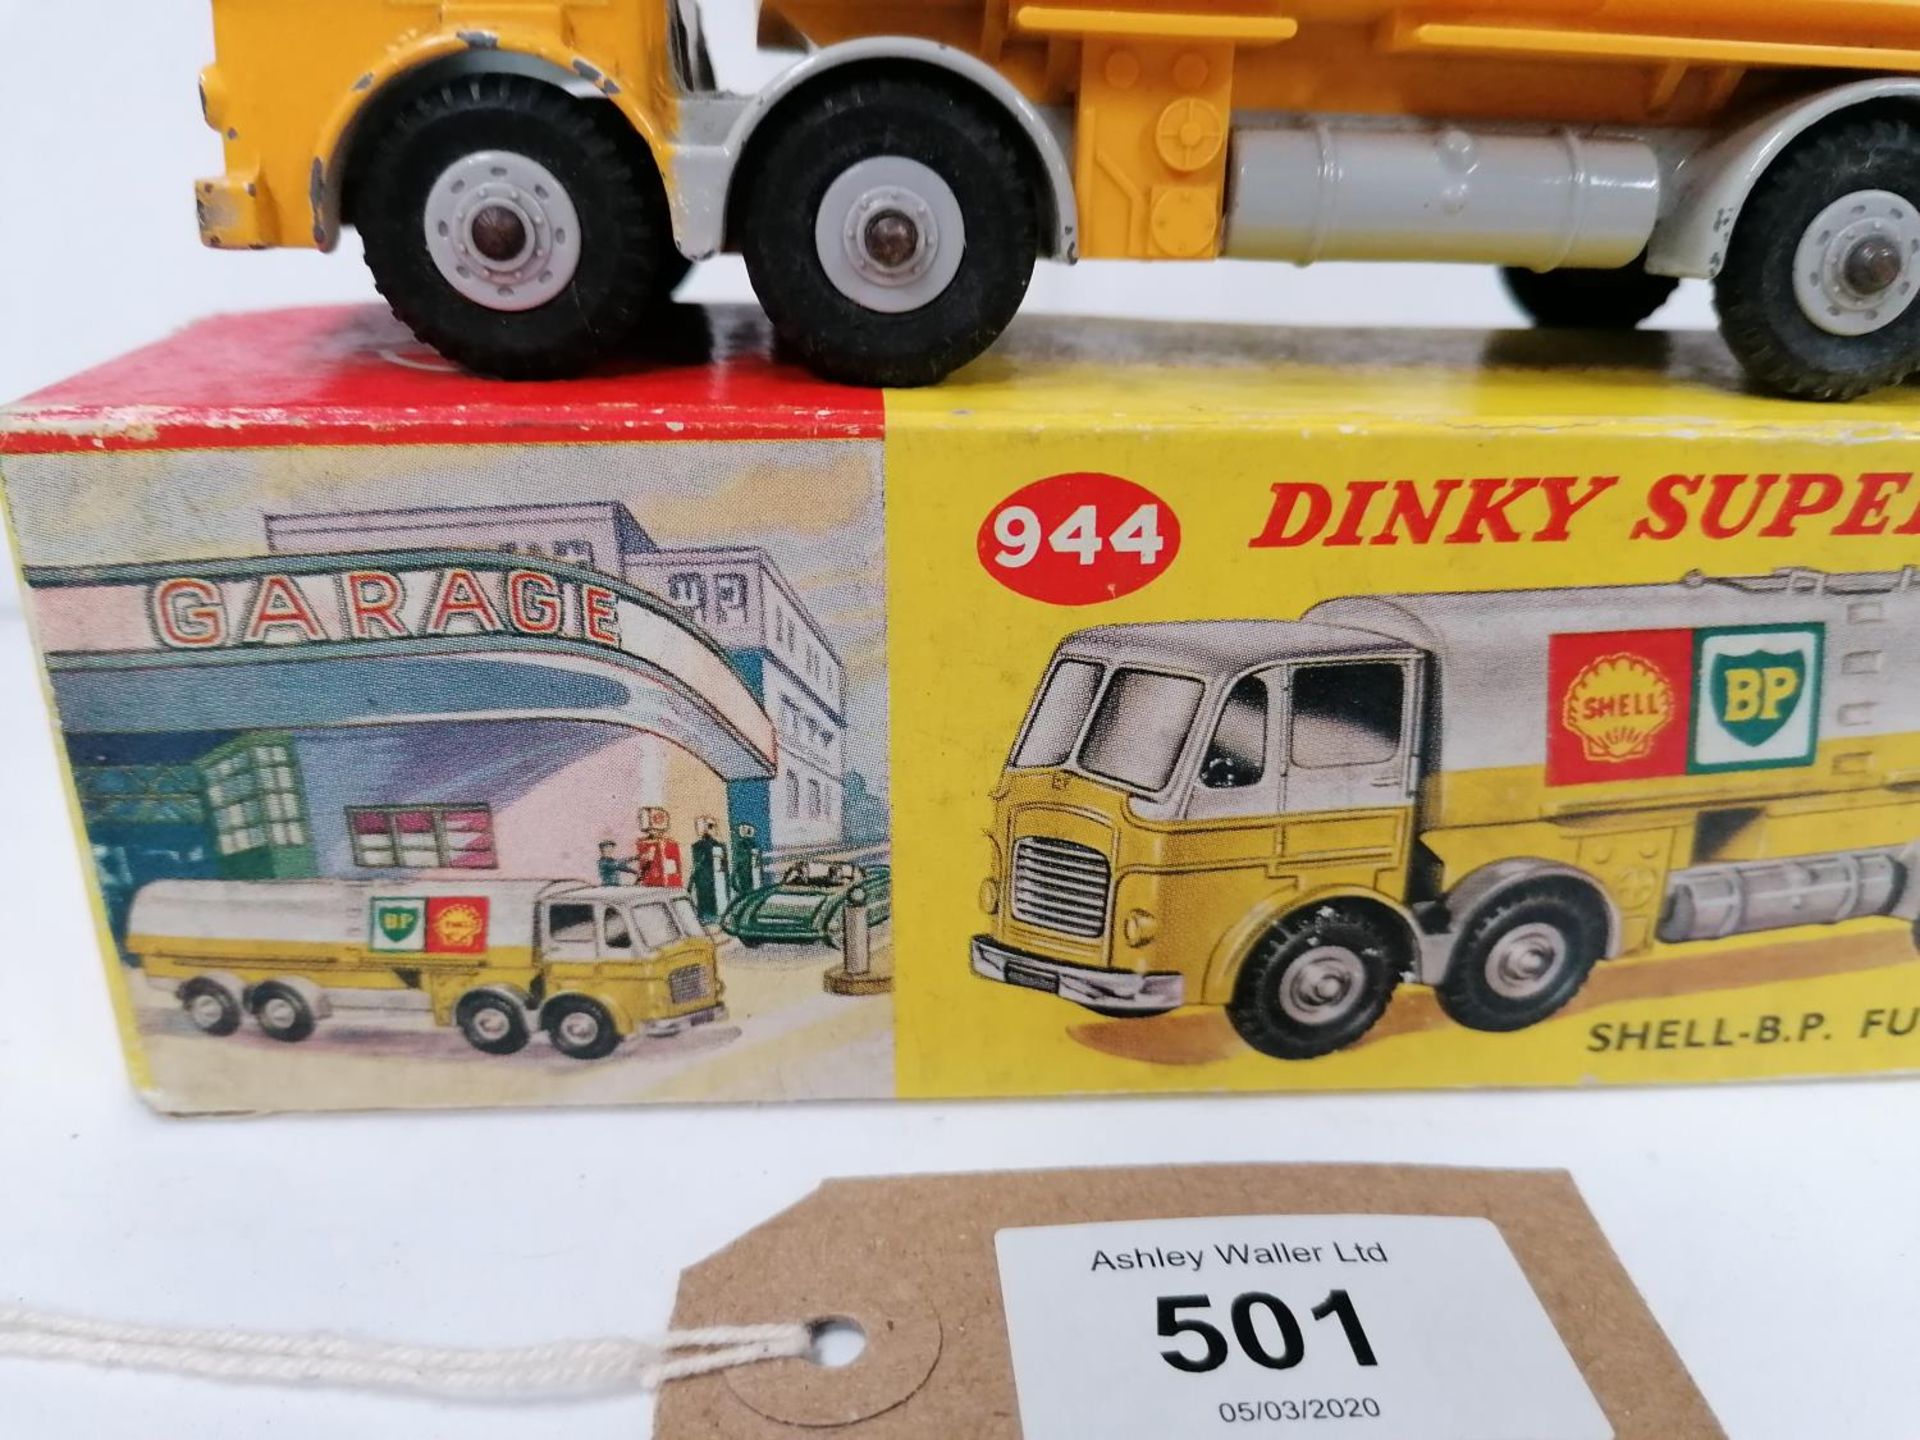 A DINKY SUPERTOYS SHELL BP TANKER IN ORIGINAL BOX - MODEL NUMBER 944 - Image 2 of 5